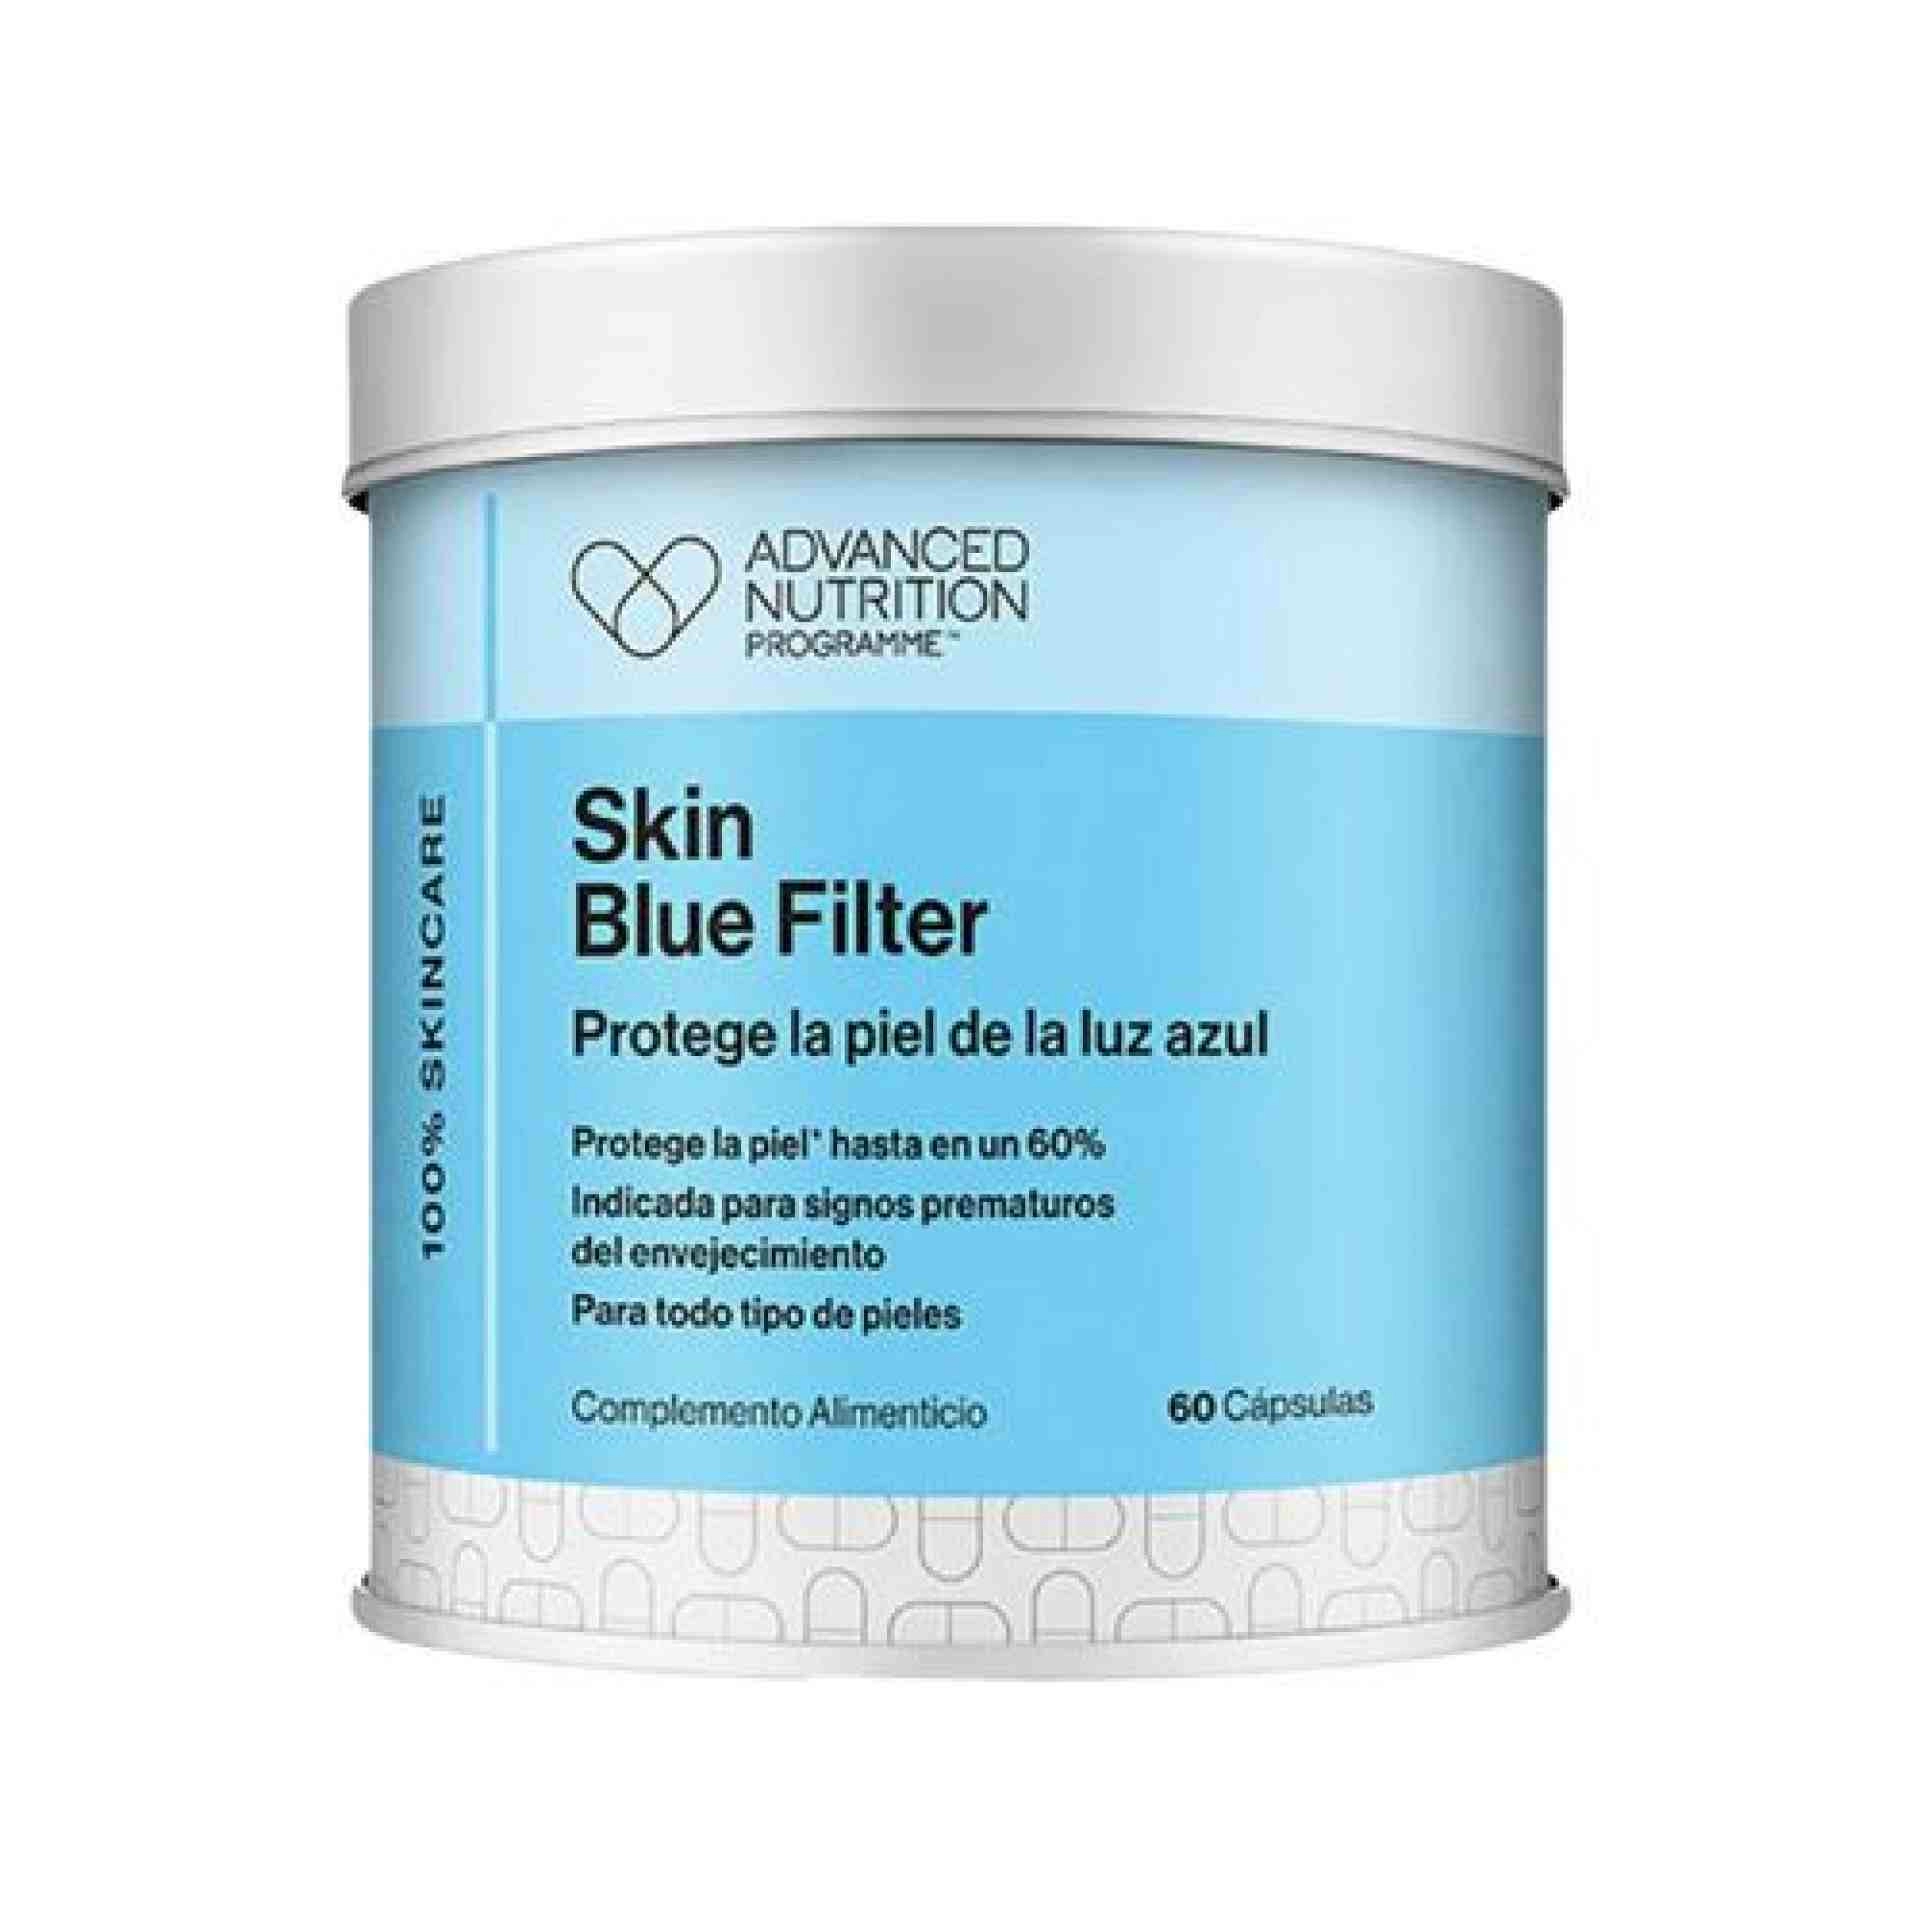 Skin Blue Filter - Nutricosmética 60 caps. - Soluciones específicas - Advanced Nutrition Programme ®